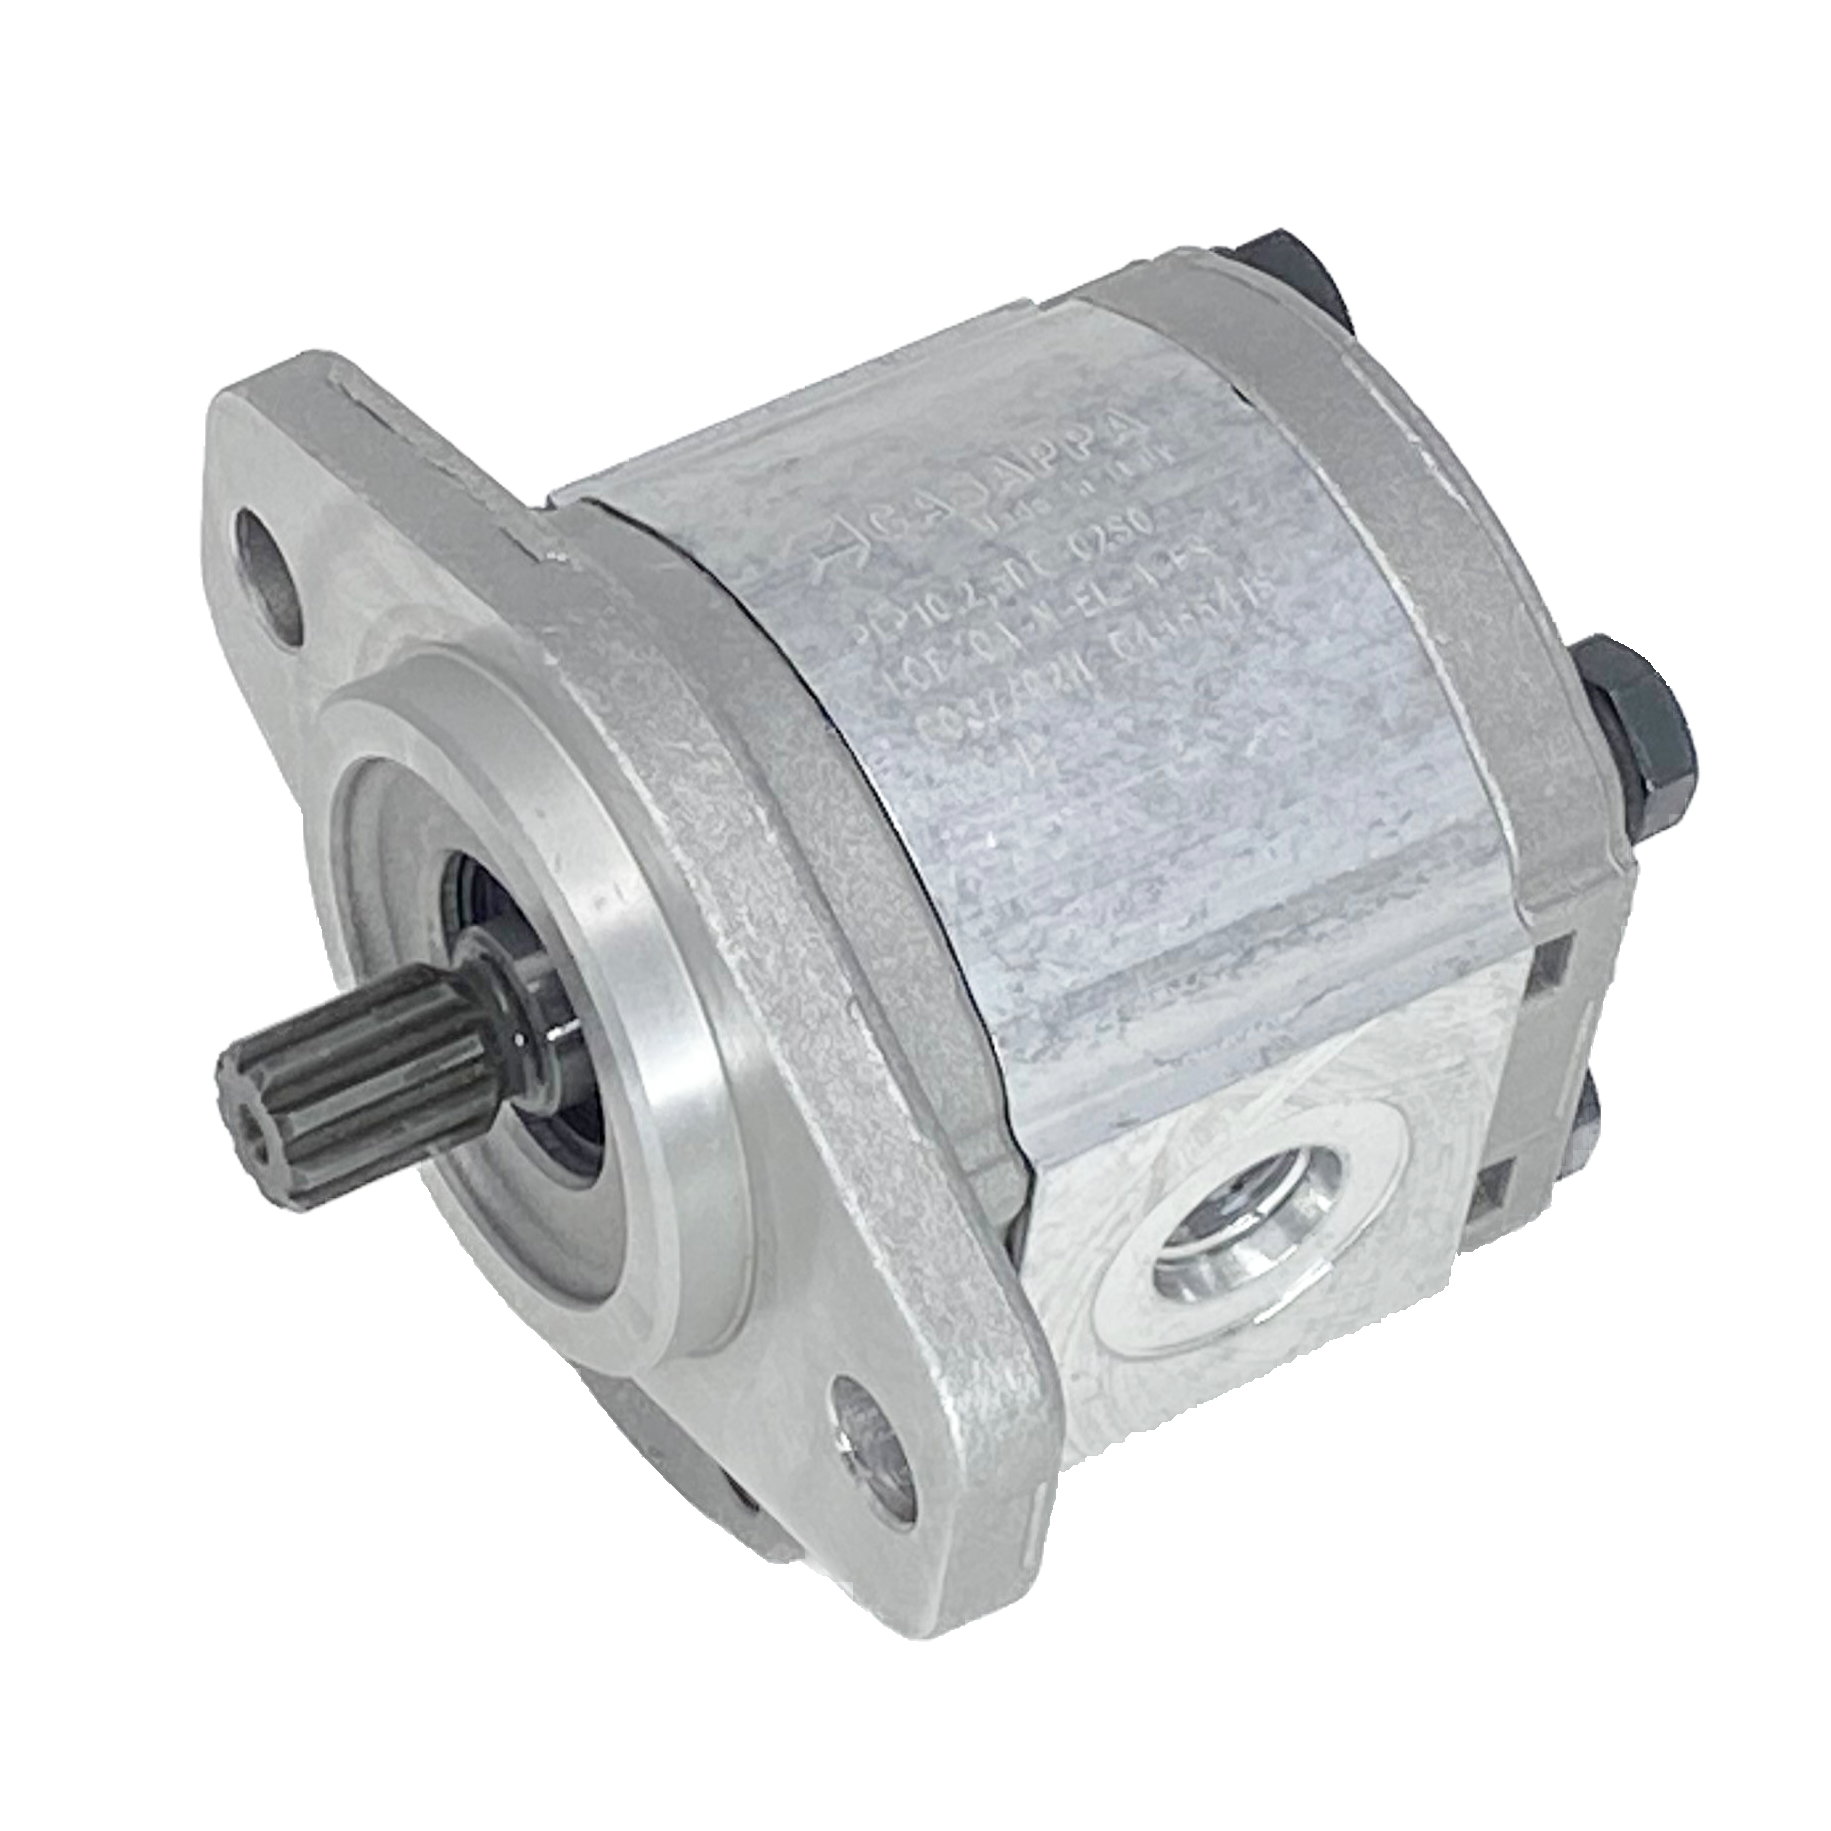 PLP10.4D0-02S0-LOB/OA-N-EL : Casappa Polaris Gear Pump, 4.27cc, 3625psi Rated, 4000RPM, CW, 9T 20/40dp Shaft, SAE AA 2-Bolt Flange, 0.5 (1/2") #8 SAE Inlet, 0.375 (3/8") #6 SAE Outlet, Aluminum Body & Flange